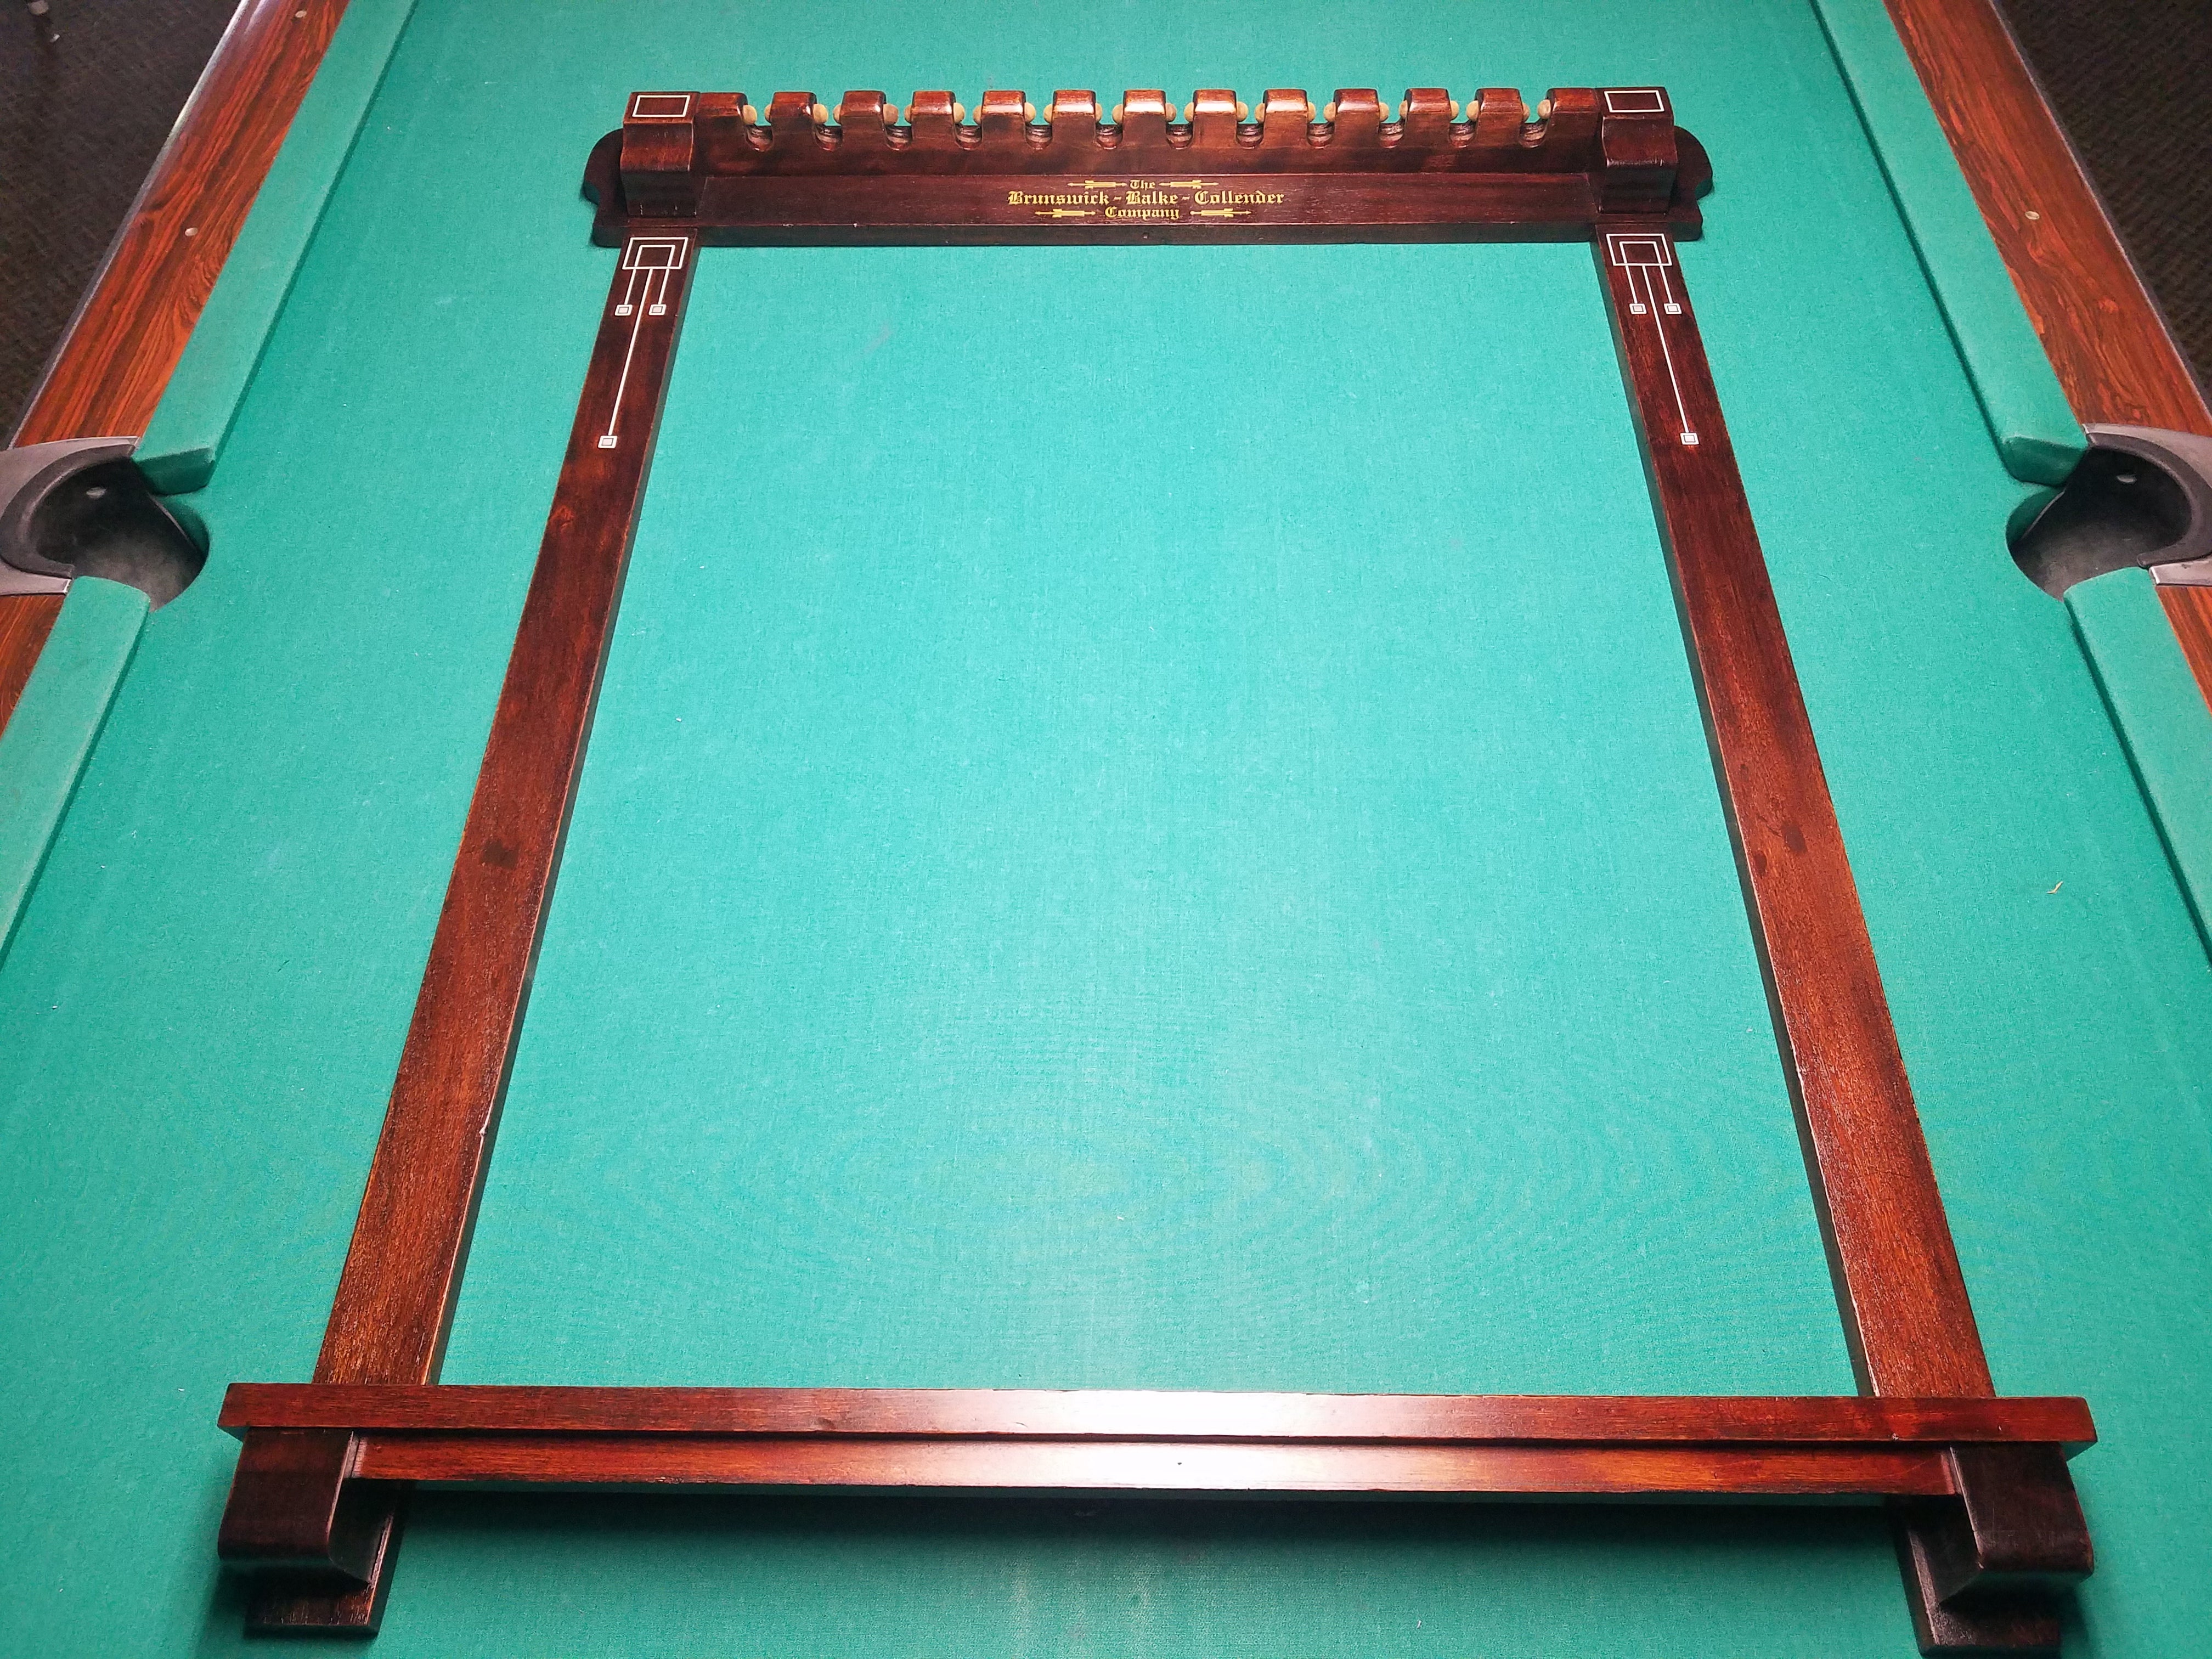 Historic Cue rack from Cochrans Billiards